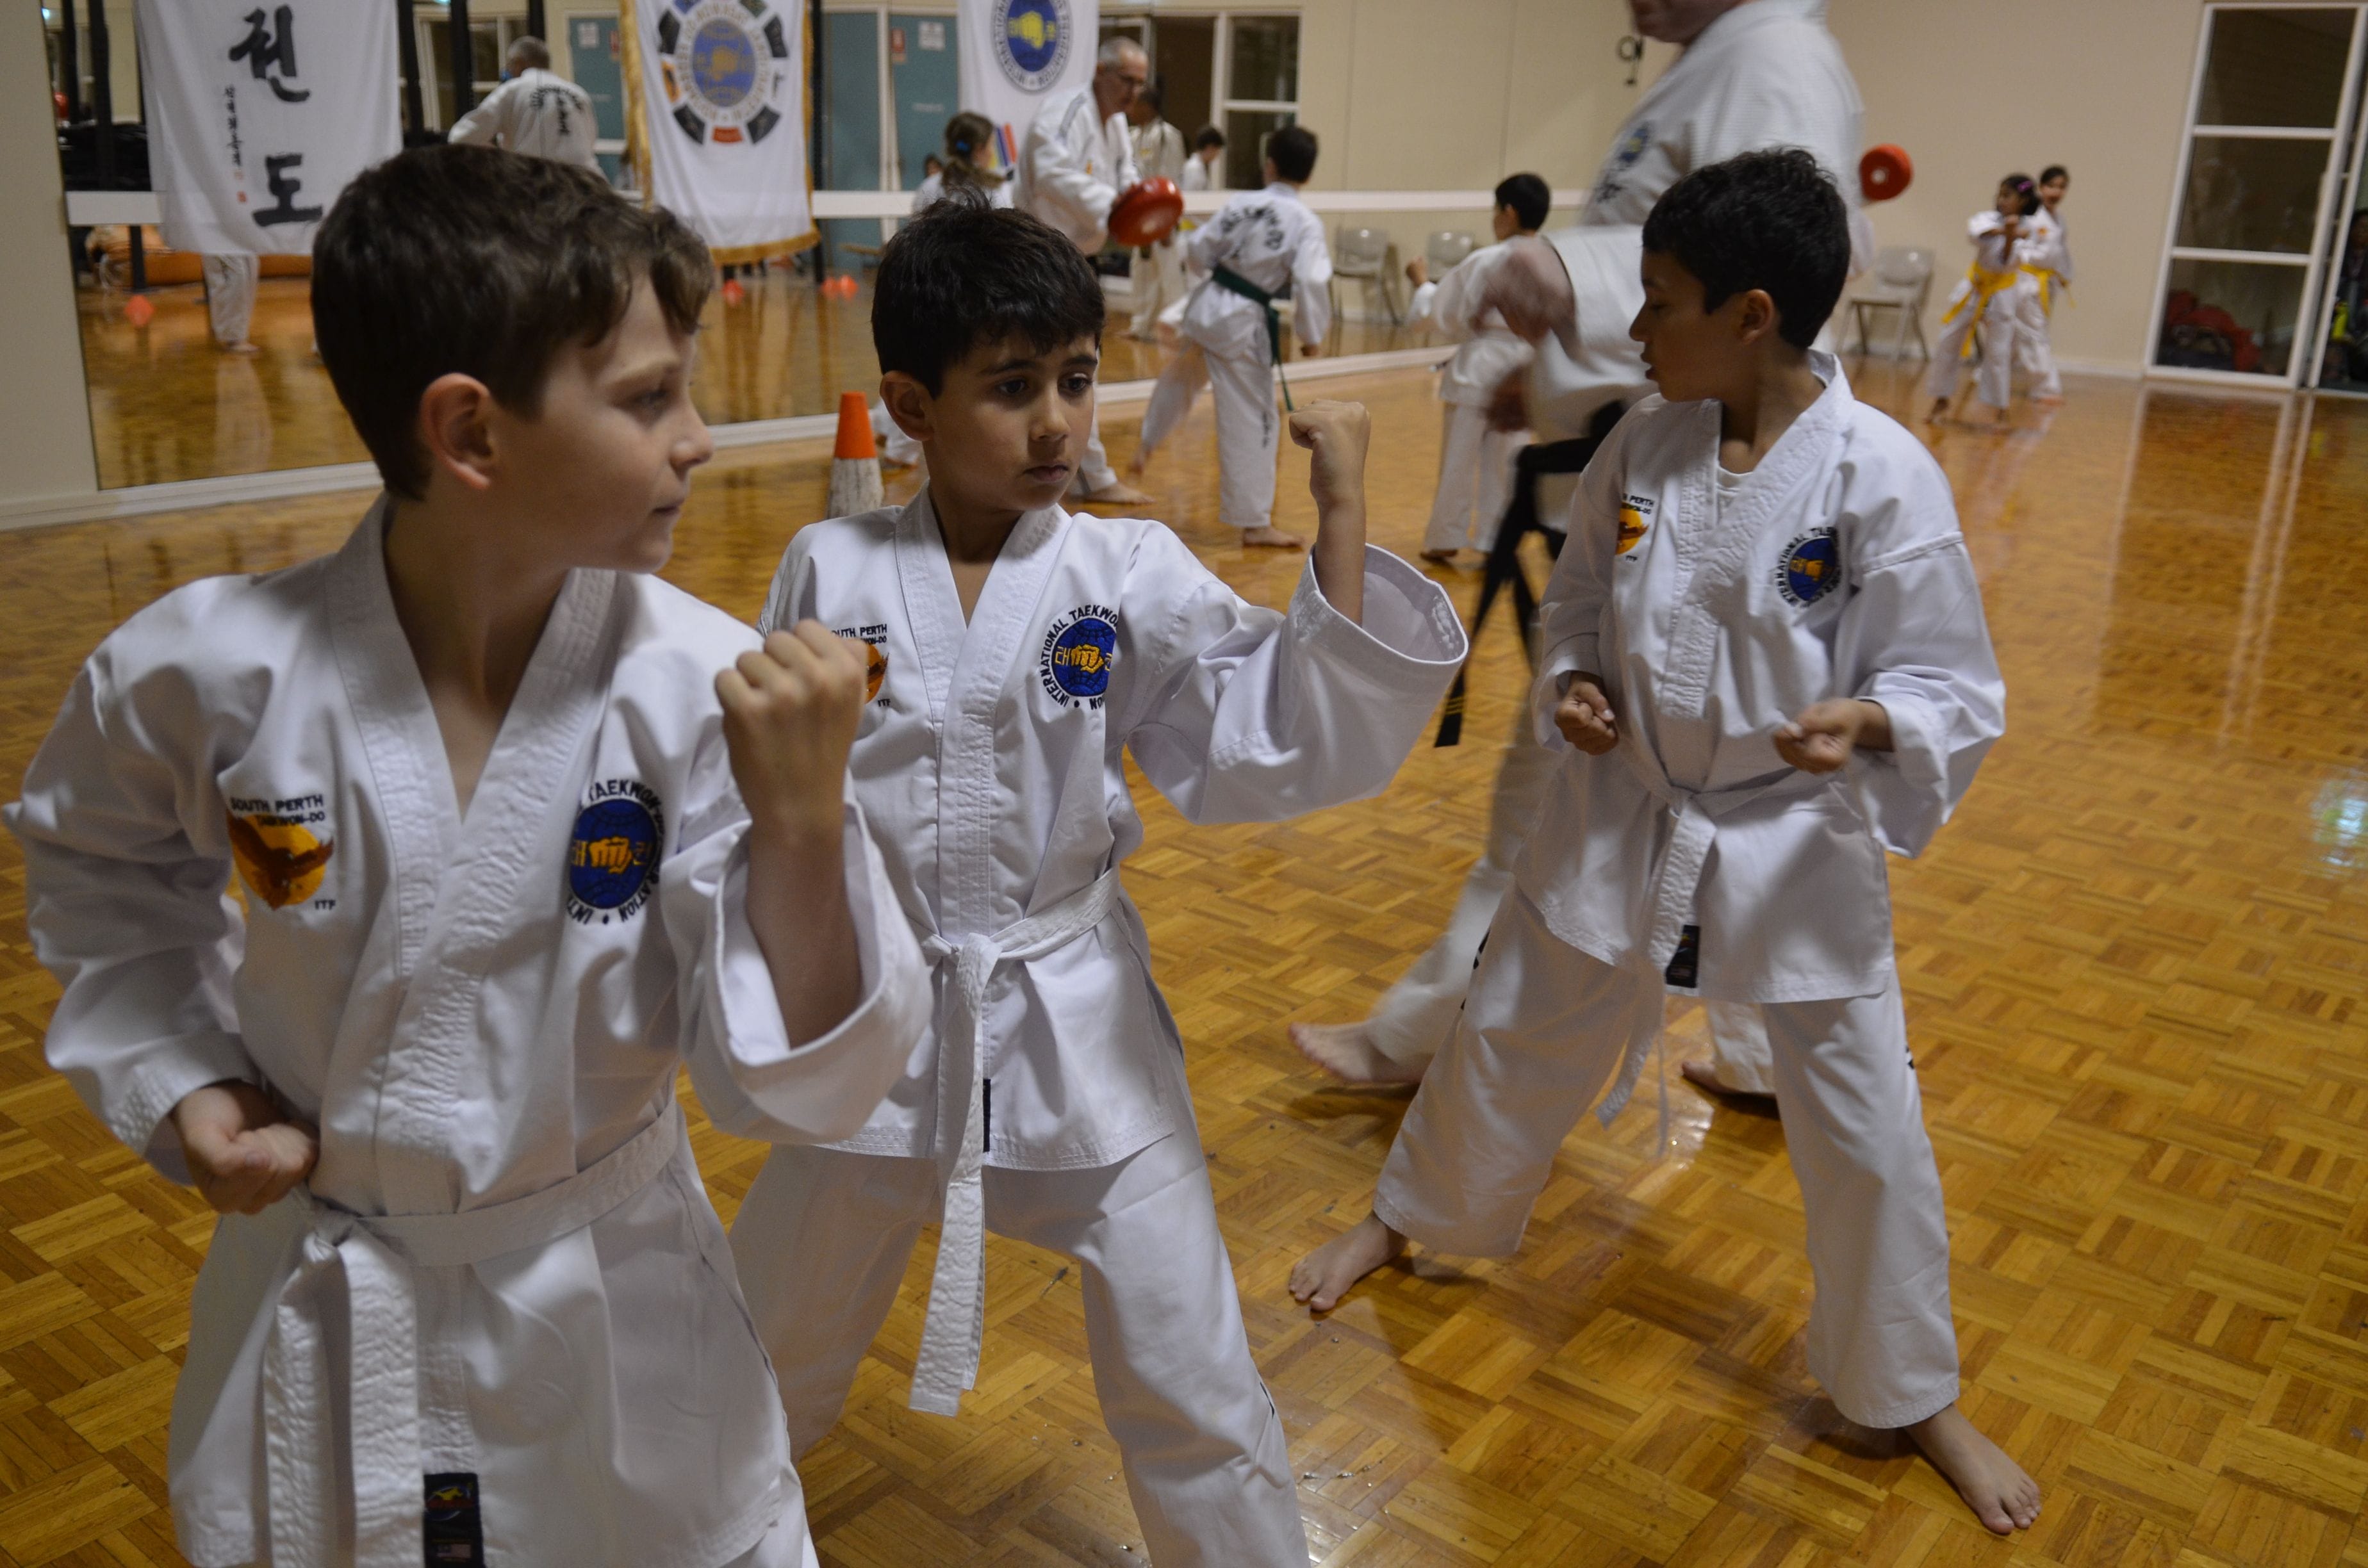 Kids Martial Arts and Self Defense Classes